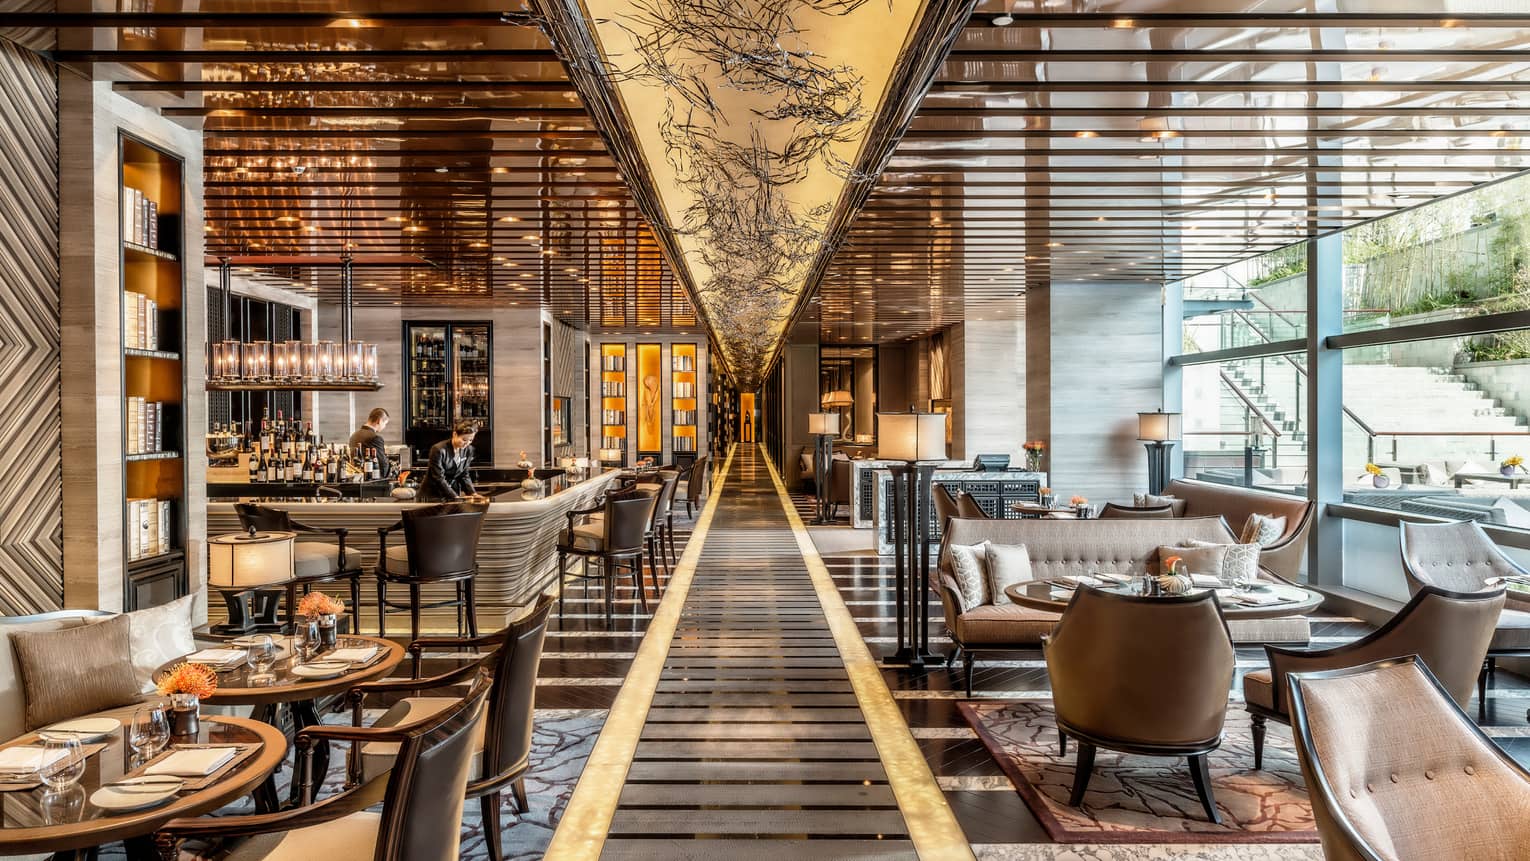 Foo modern dining room with marble, wood grain patterns, illuminated walkway